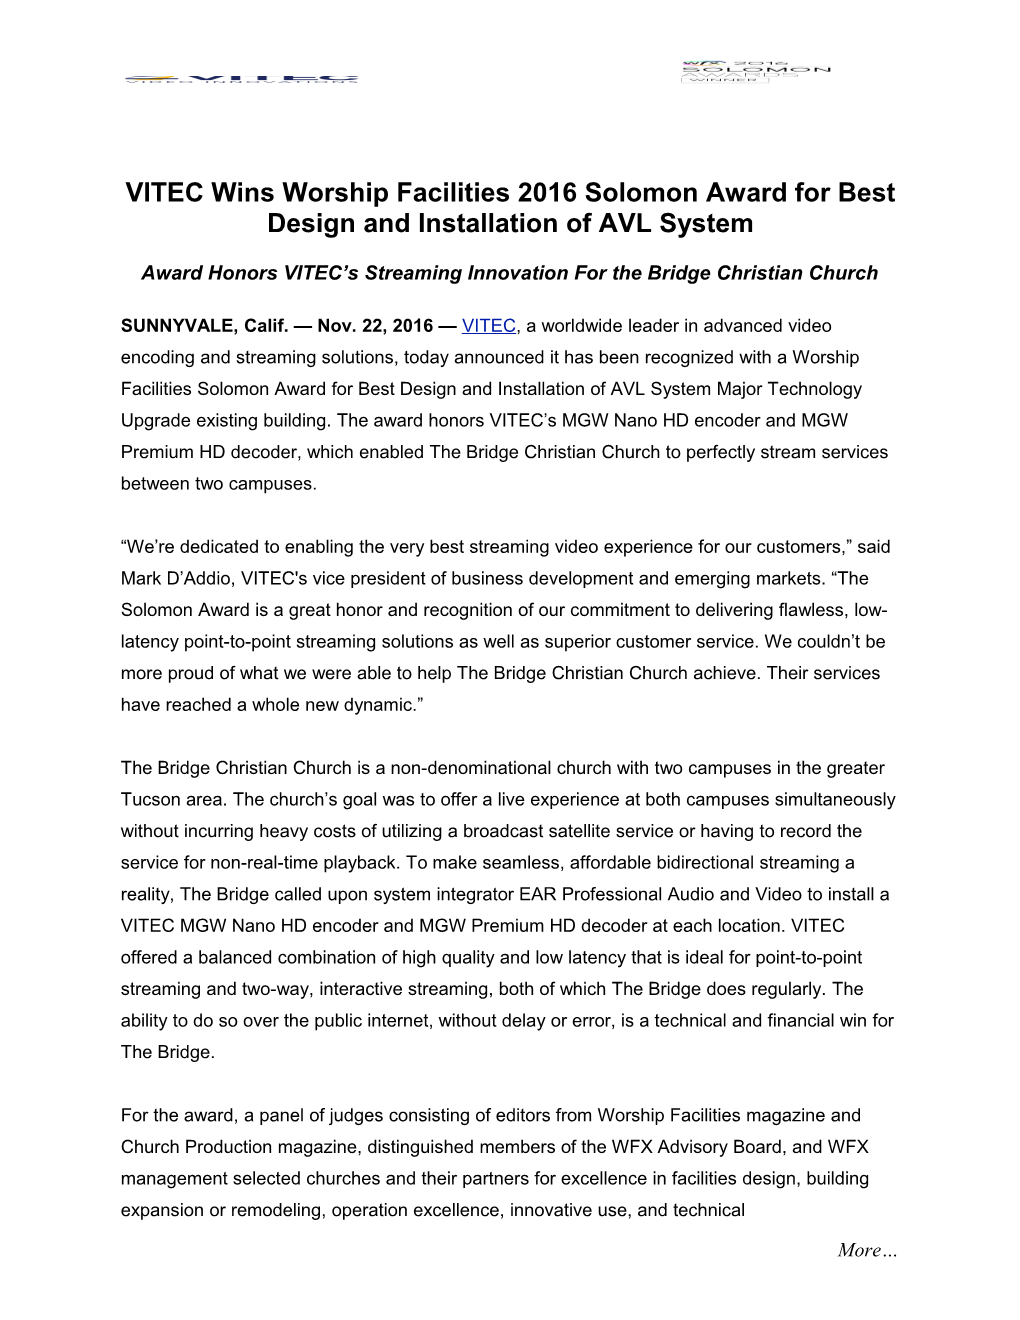 Award Honors VITEC S Streaming Innovation Forthe Bridge Christian Church